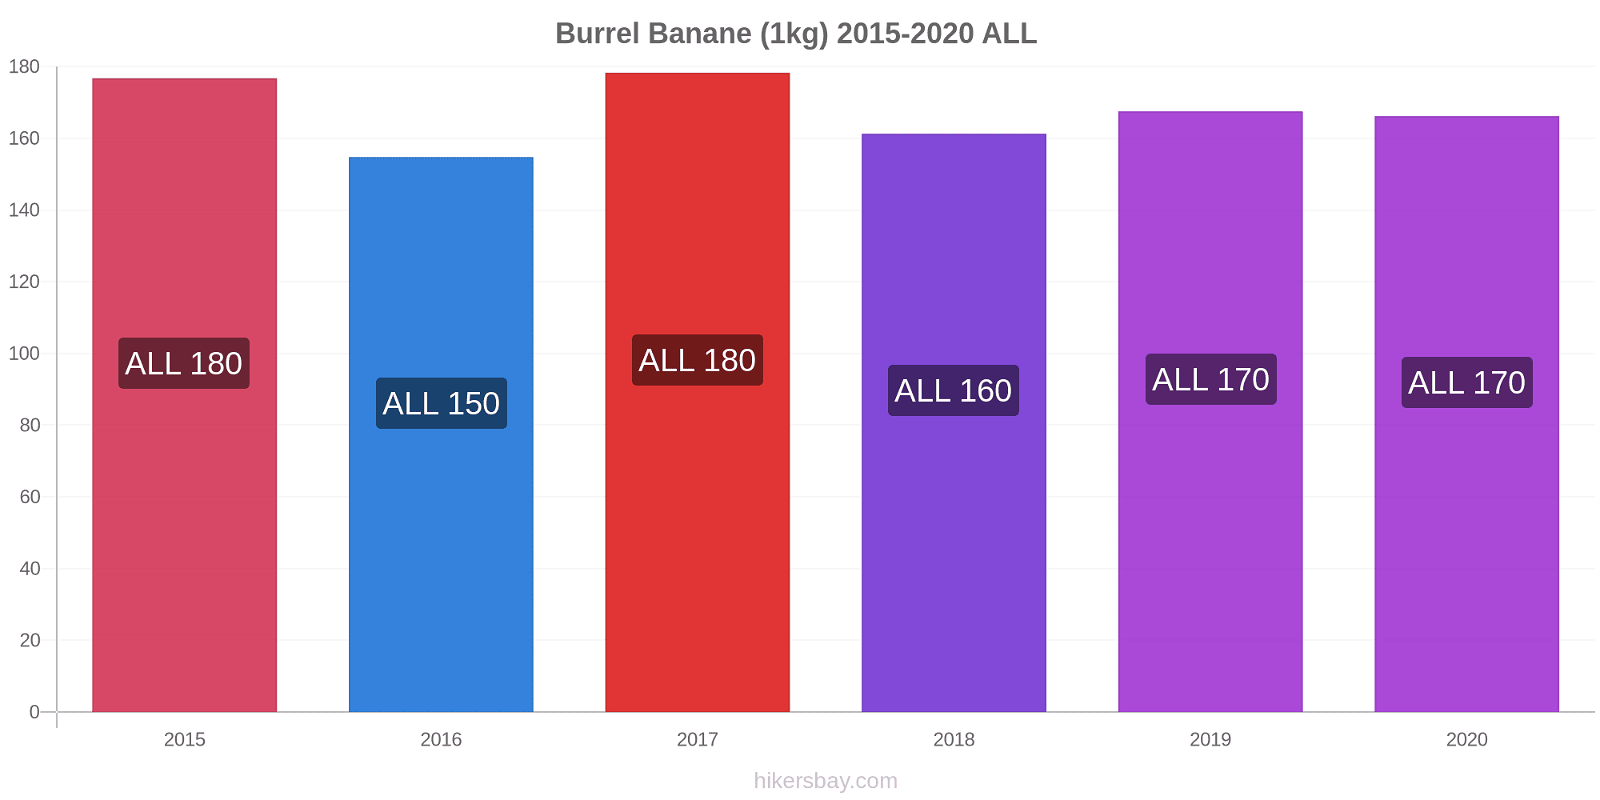 Burrel variazioni di prezzo Banana (1kg) hikersbay.com